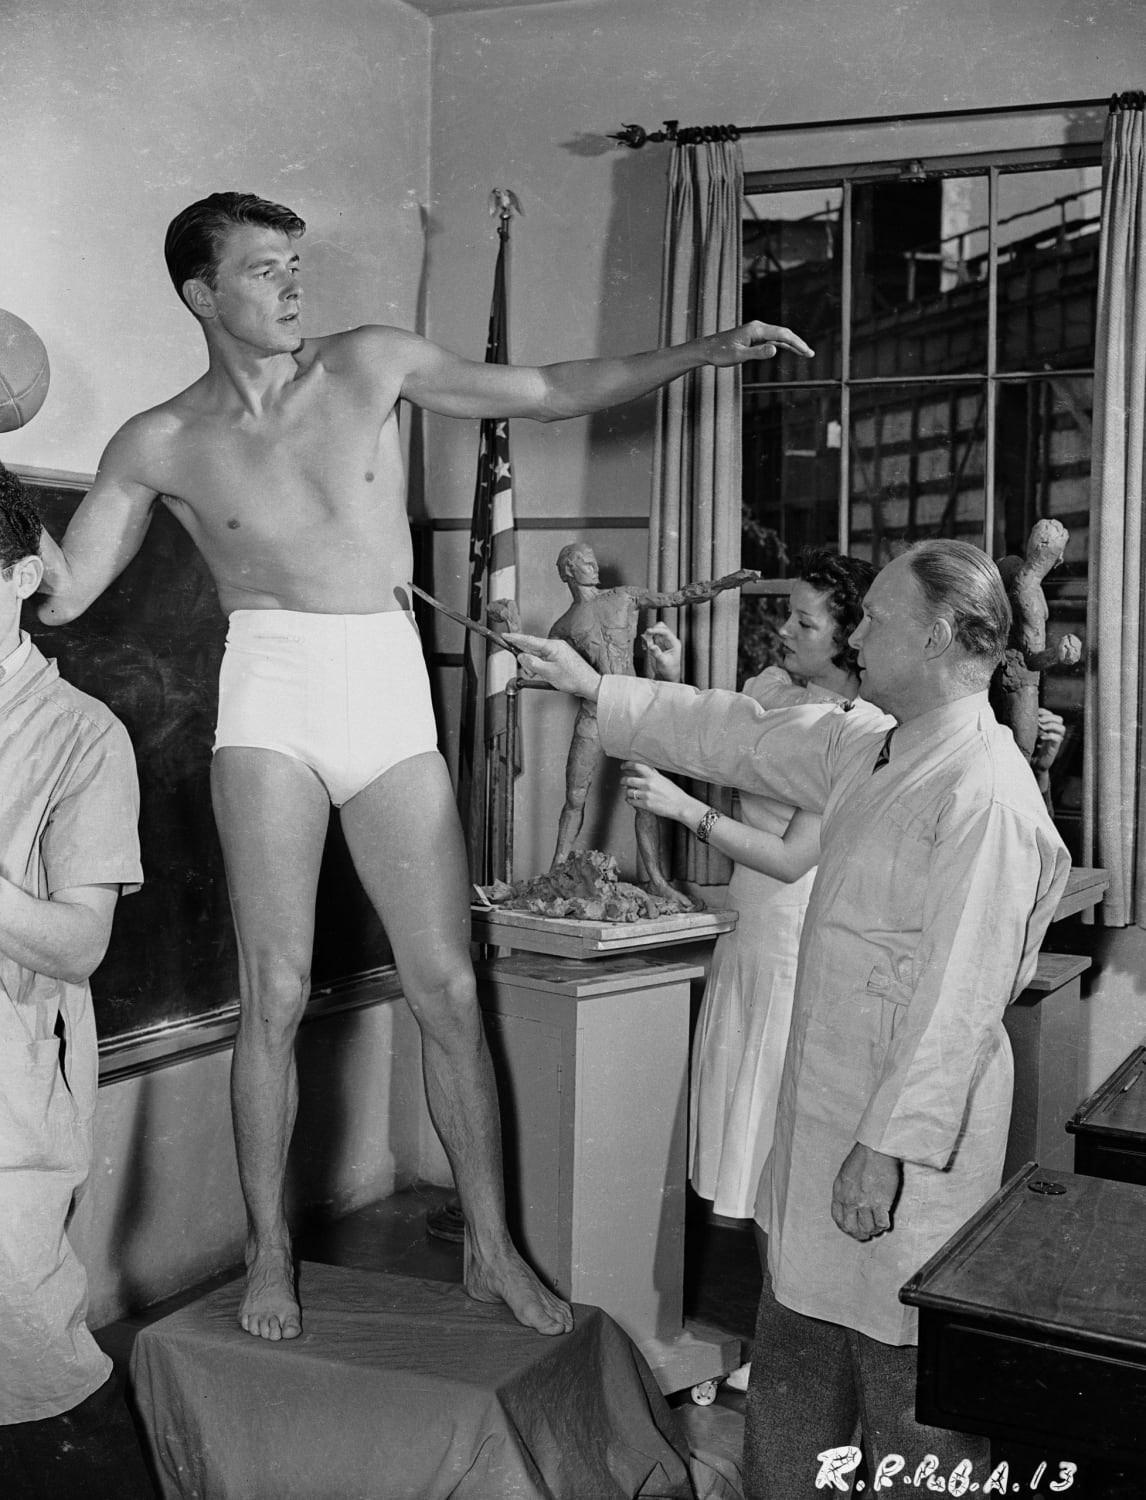 Actor & Future U.S. President Ronald Reagan modelling for a sculpture - c. 1939